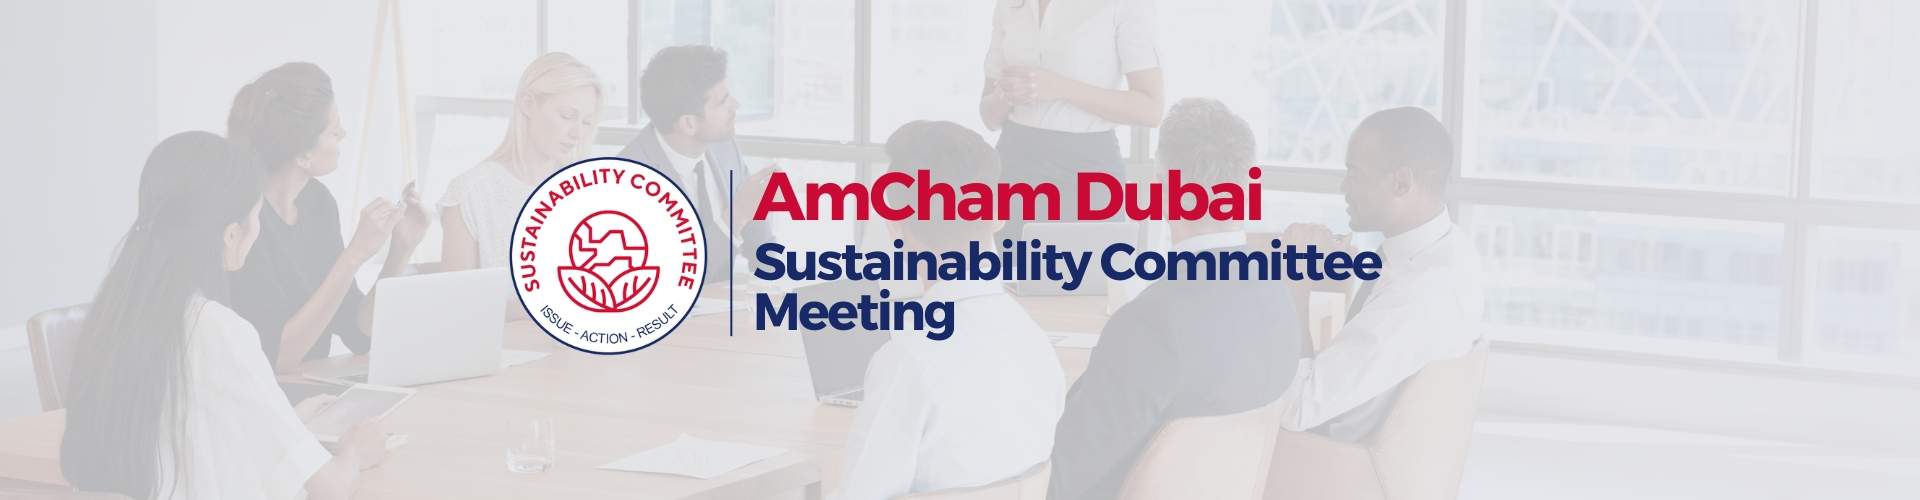 thumbnails AmCham Dubai Sustainability Committee Meeting